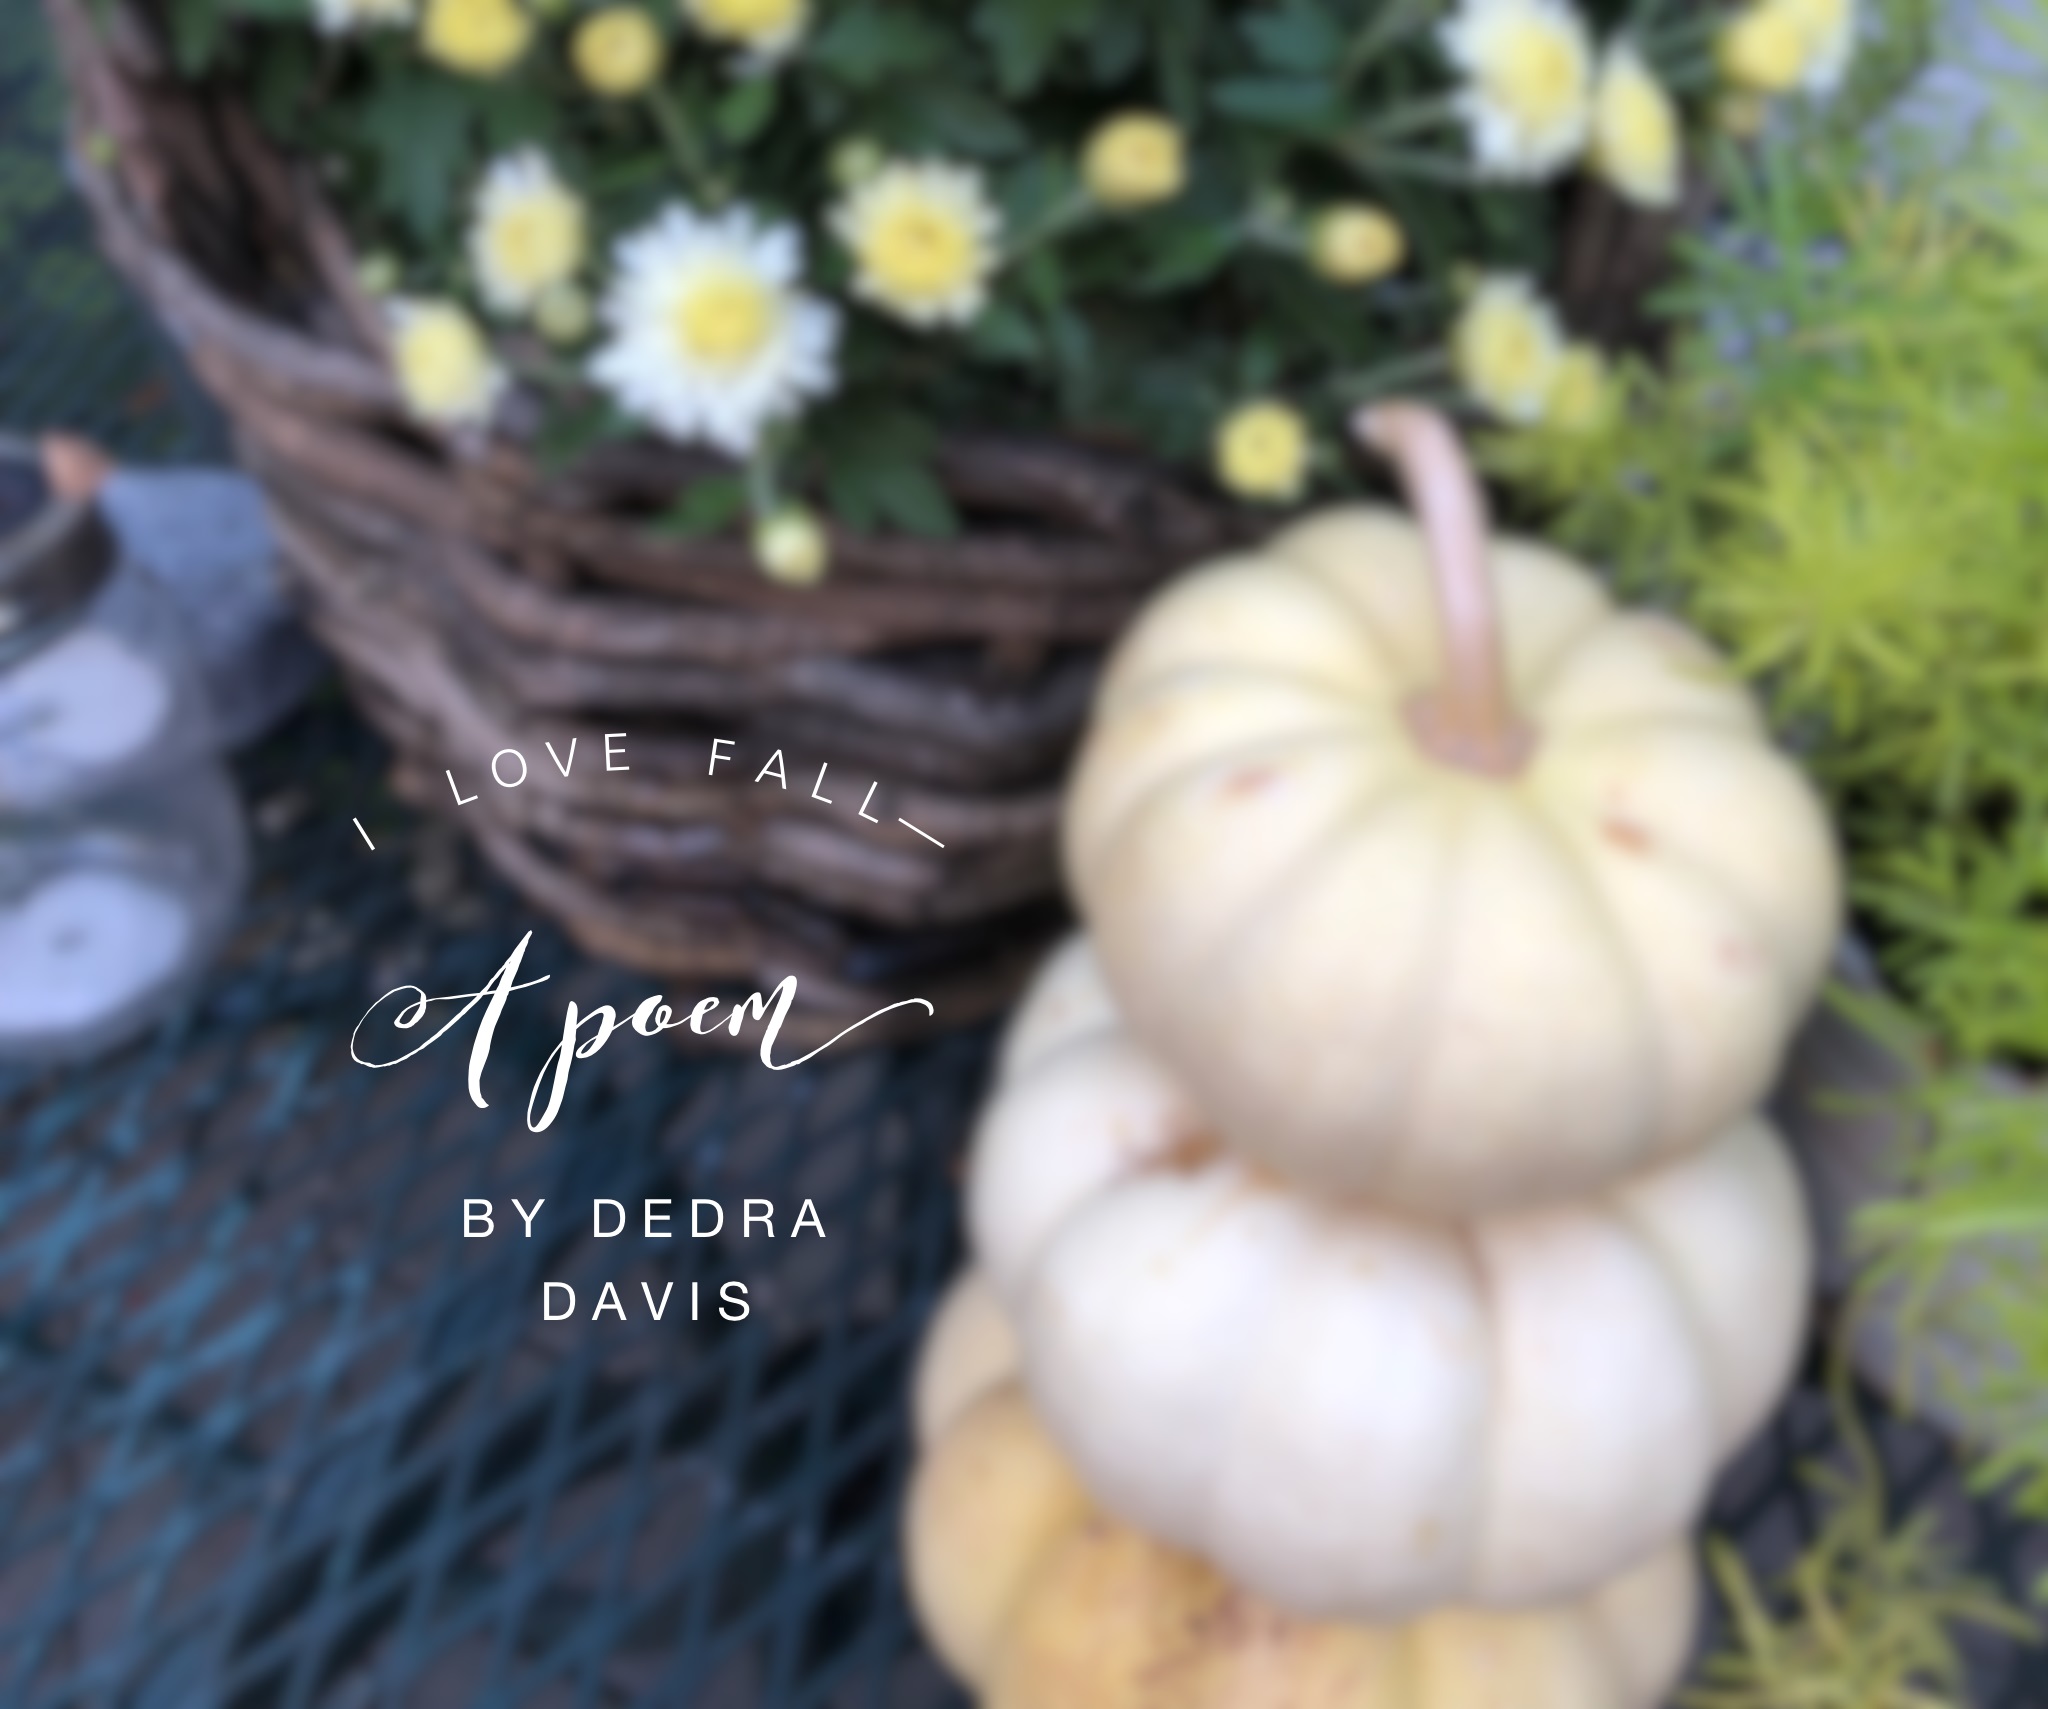 I Love Fall–a poem by Dedra Davis